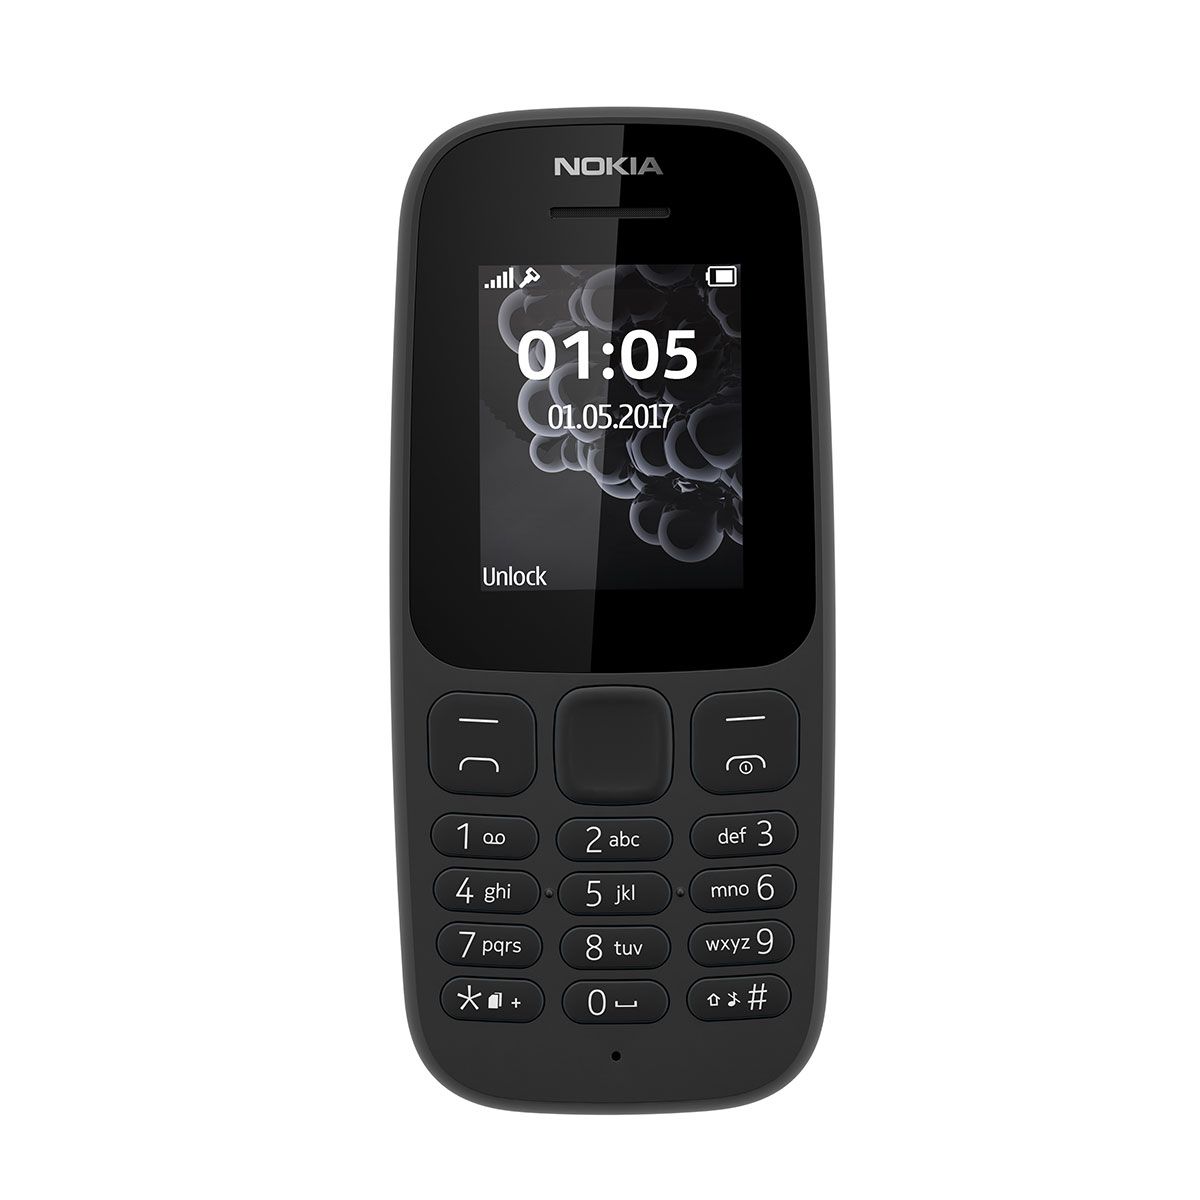 Nokia 105 4th Edition - Single Sim Feature Phone - Black - Refurbished